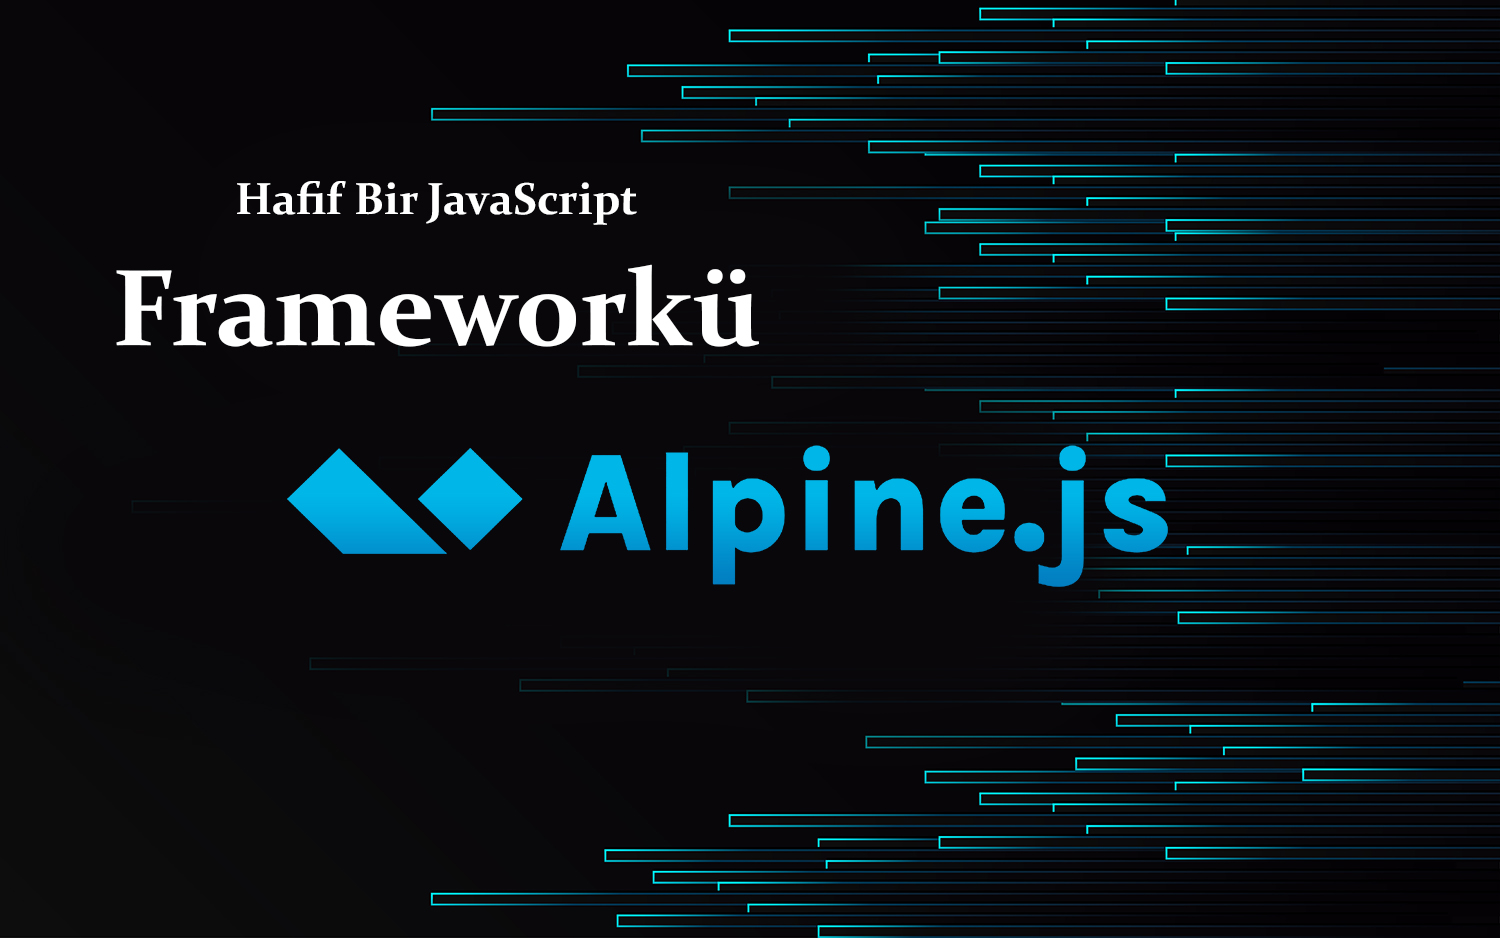 hafif-bir-javascript-frameworku-olan-alpinejs